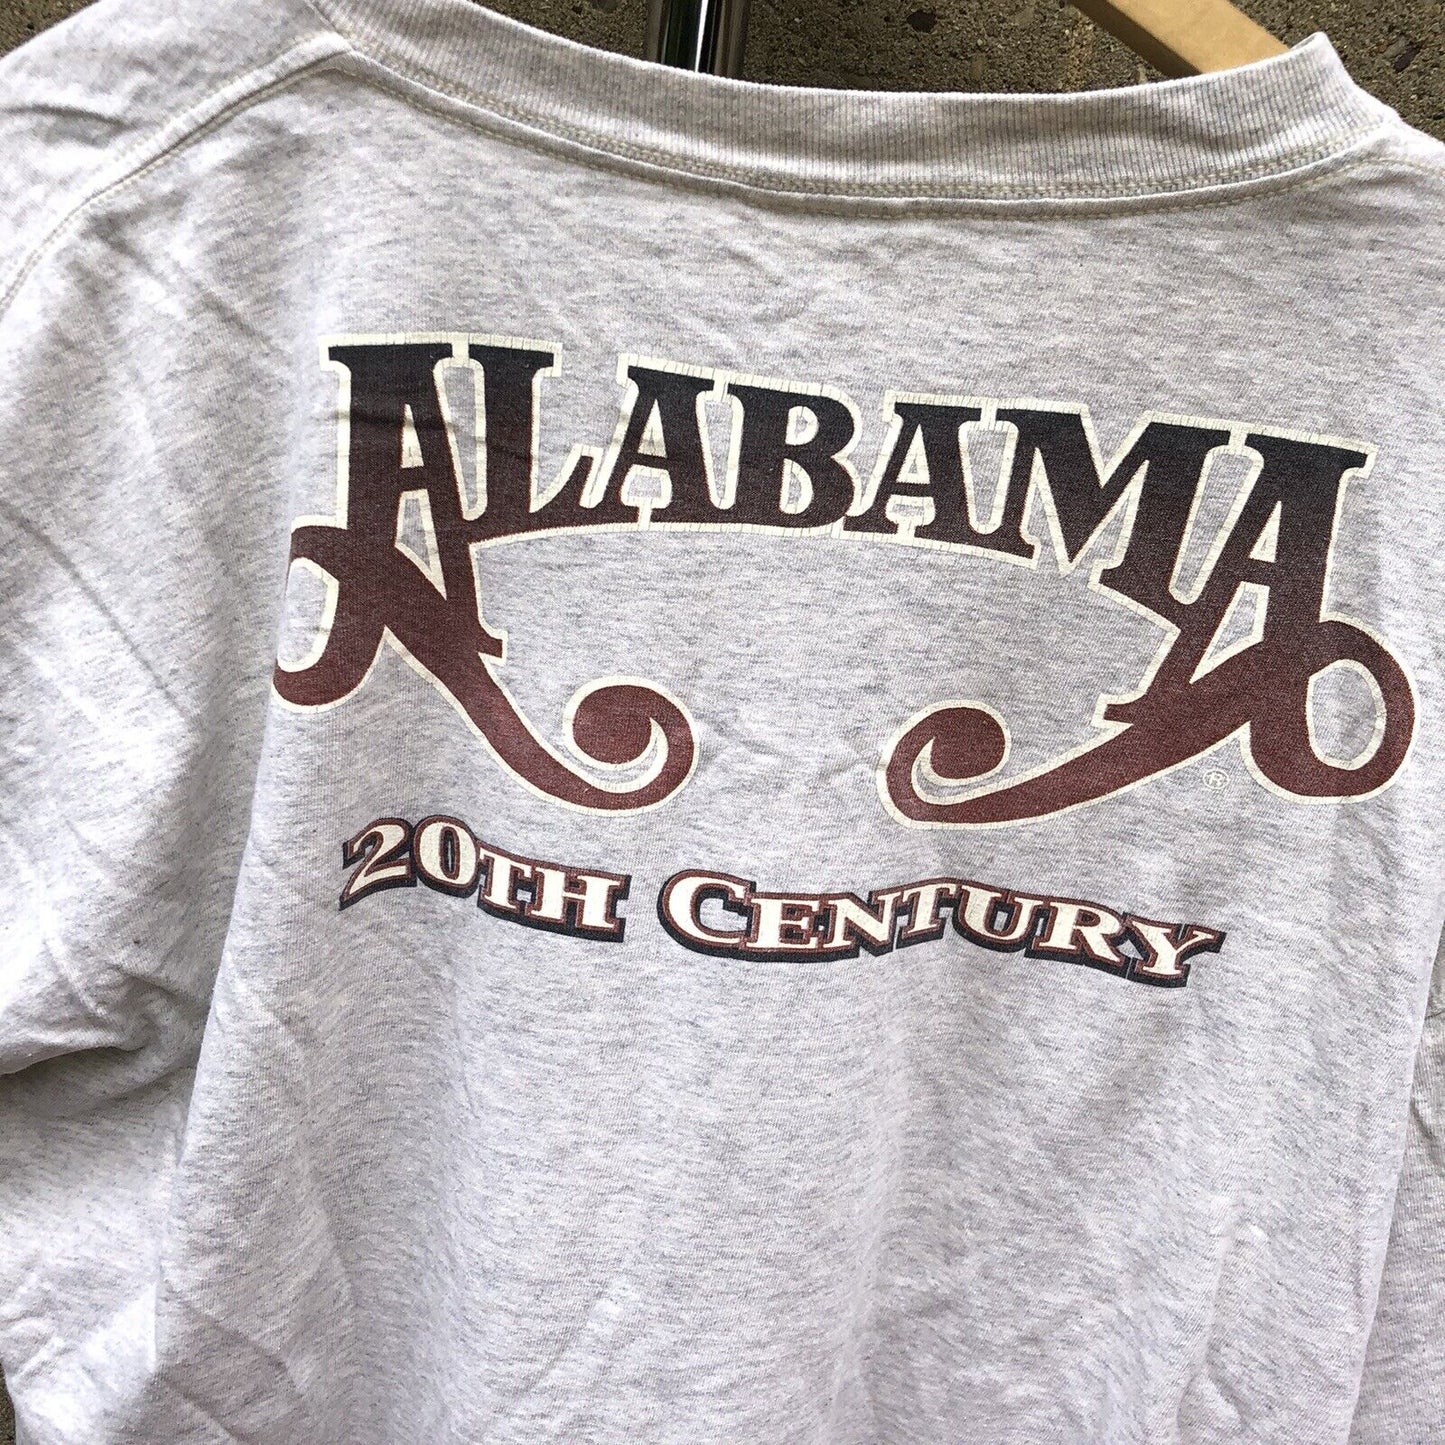 VTG Alabama 20th Century T Shirt Sz Xxl Double  Sided Multicolor Graphic